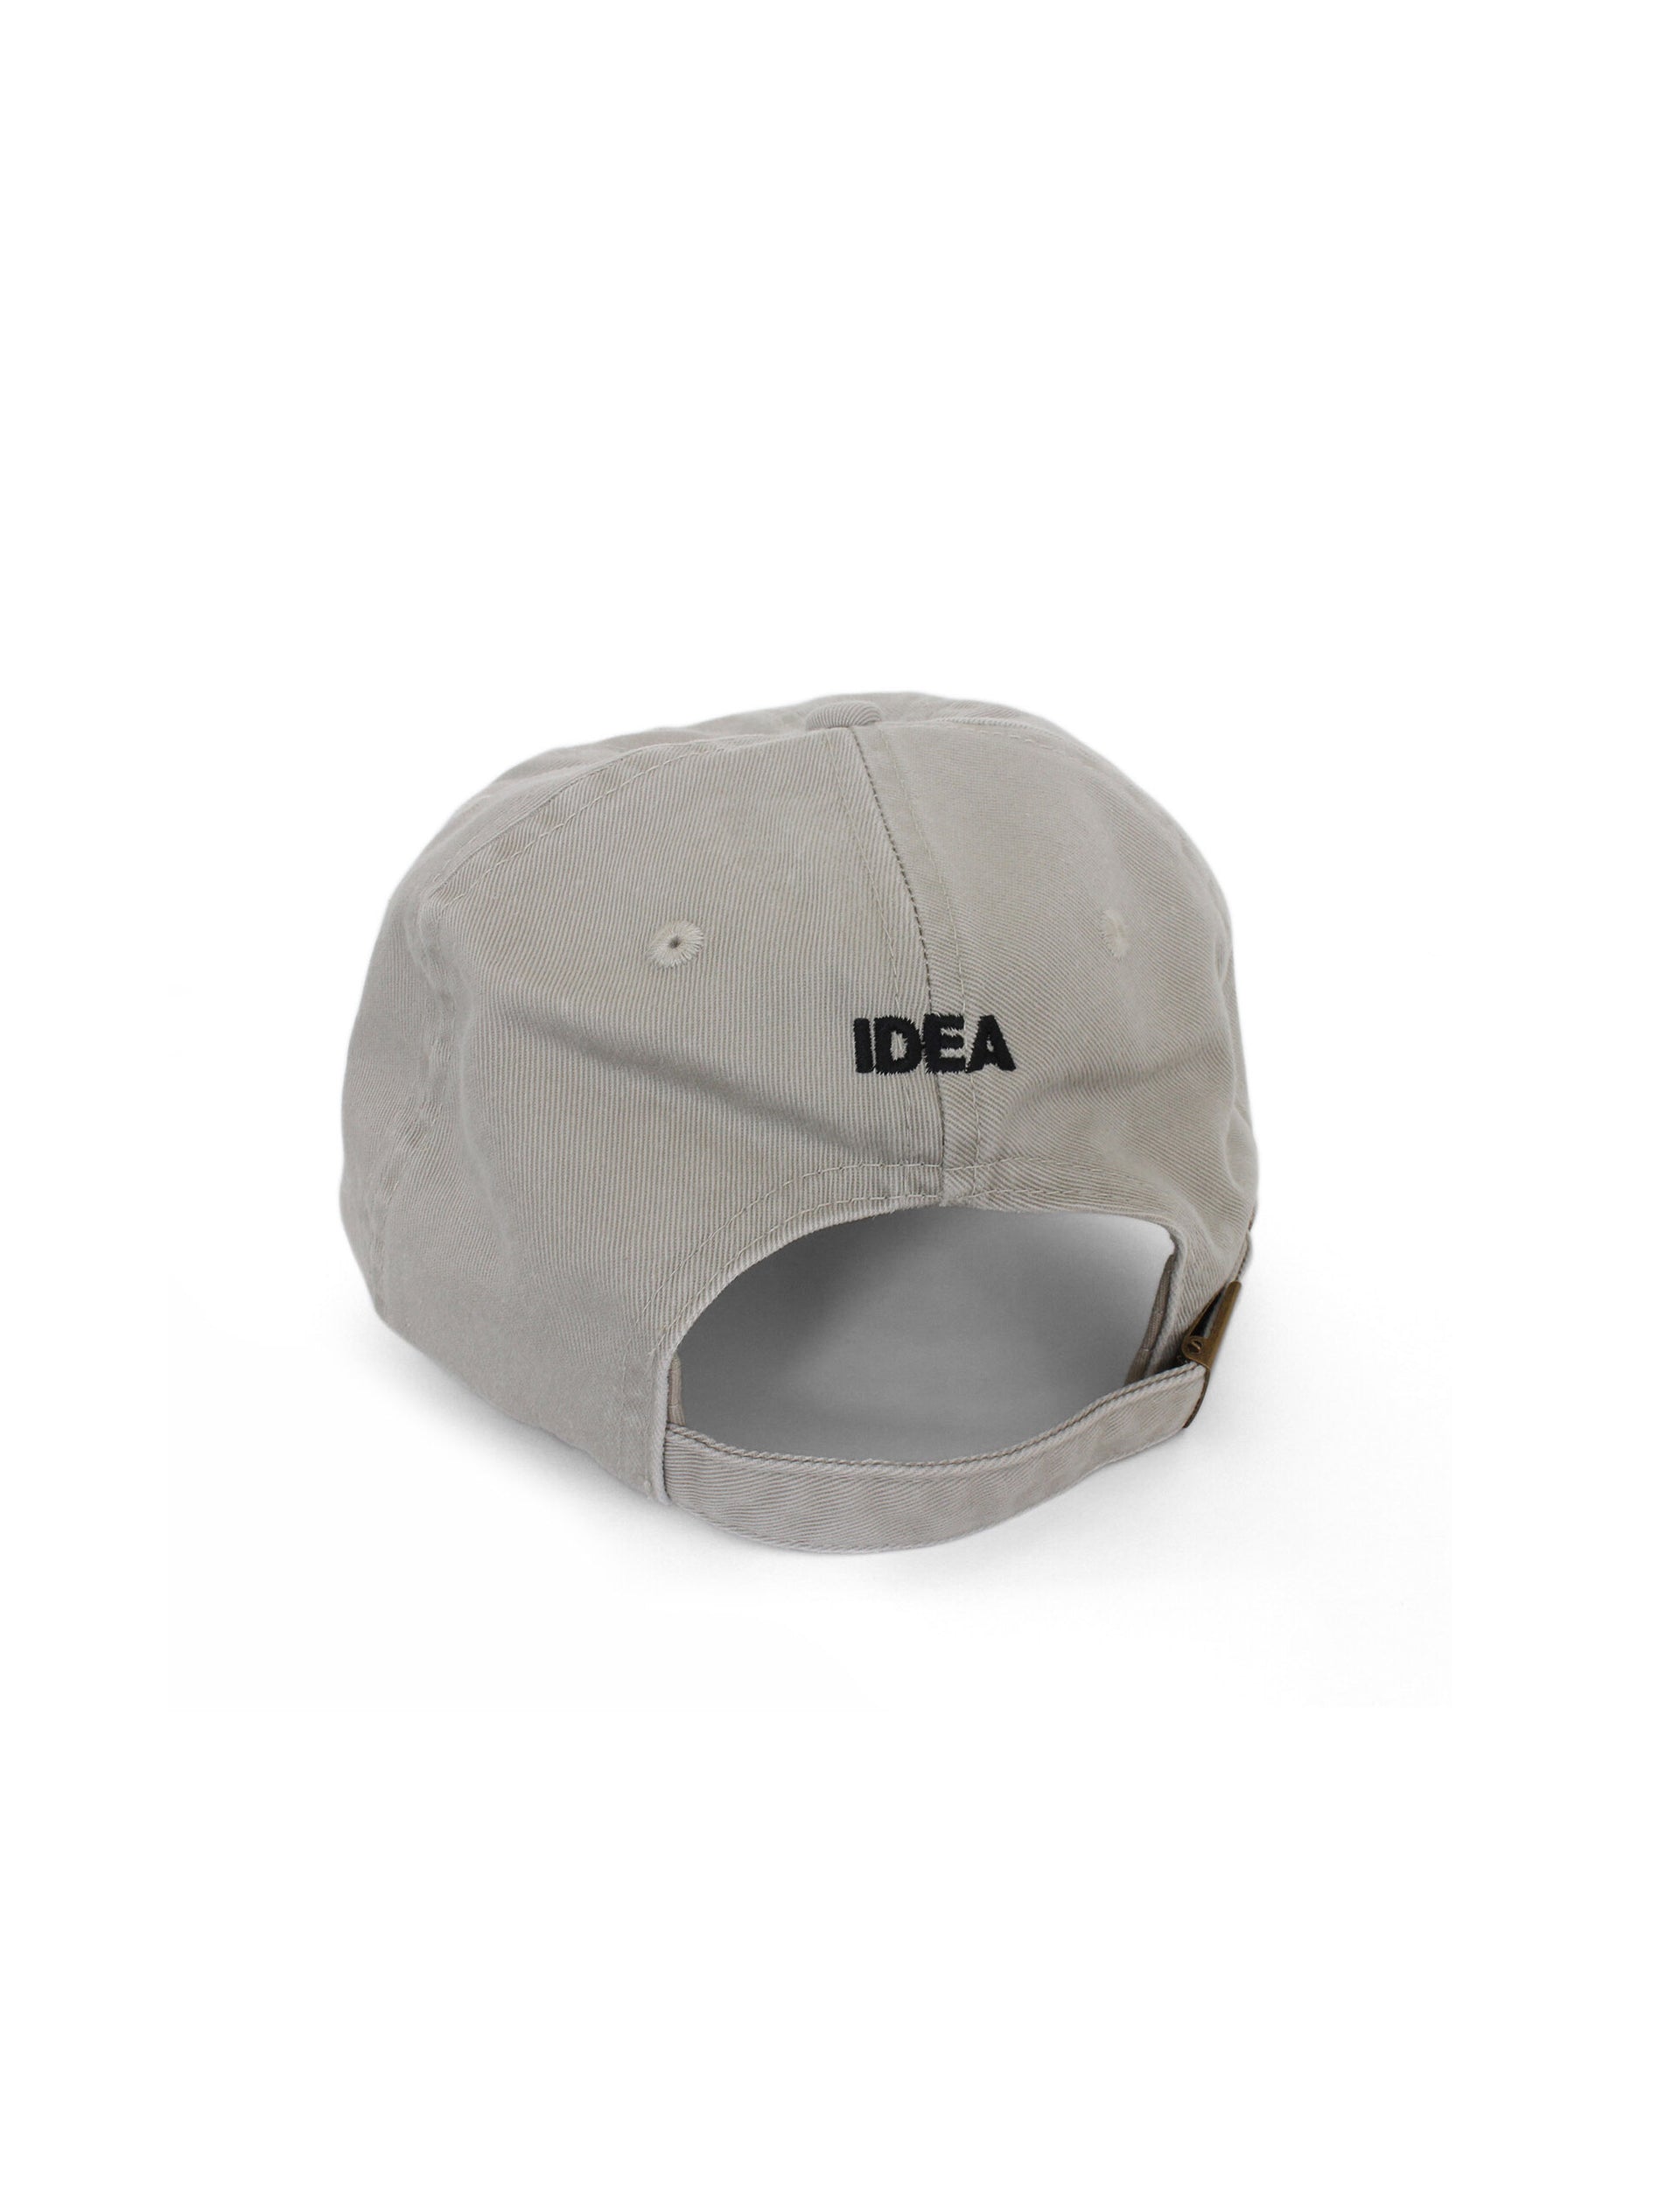 IDEA MOOMIN TOP HAT Hat